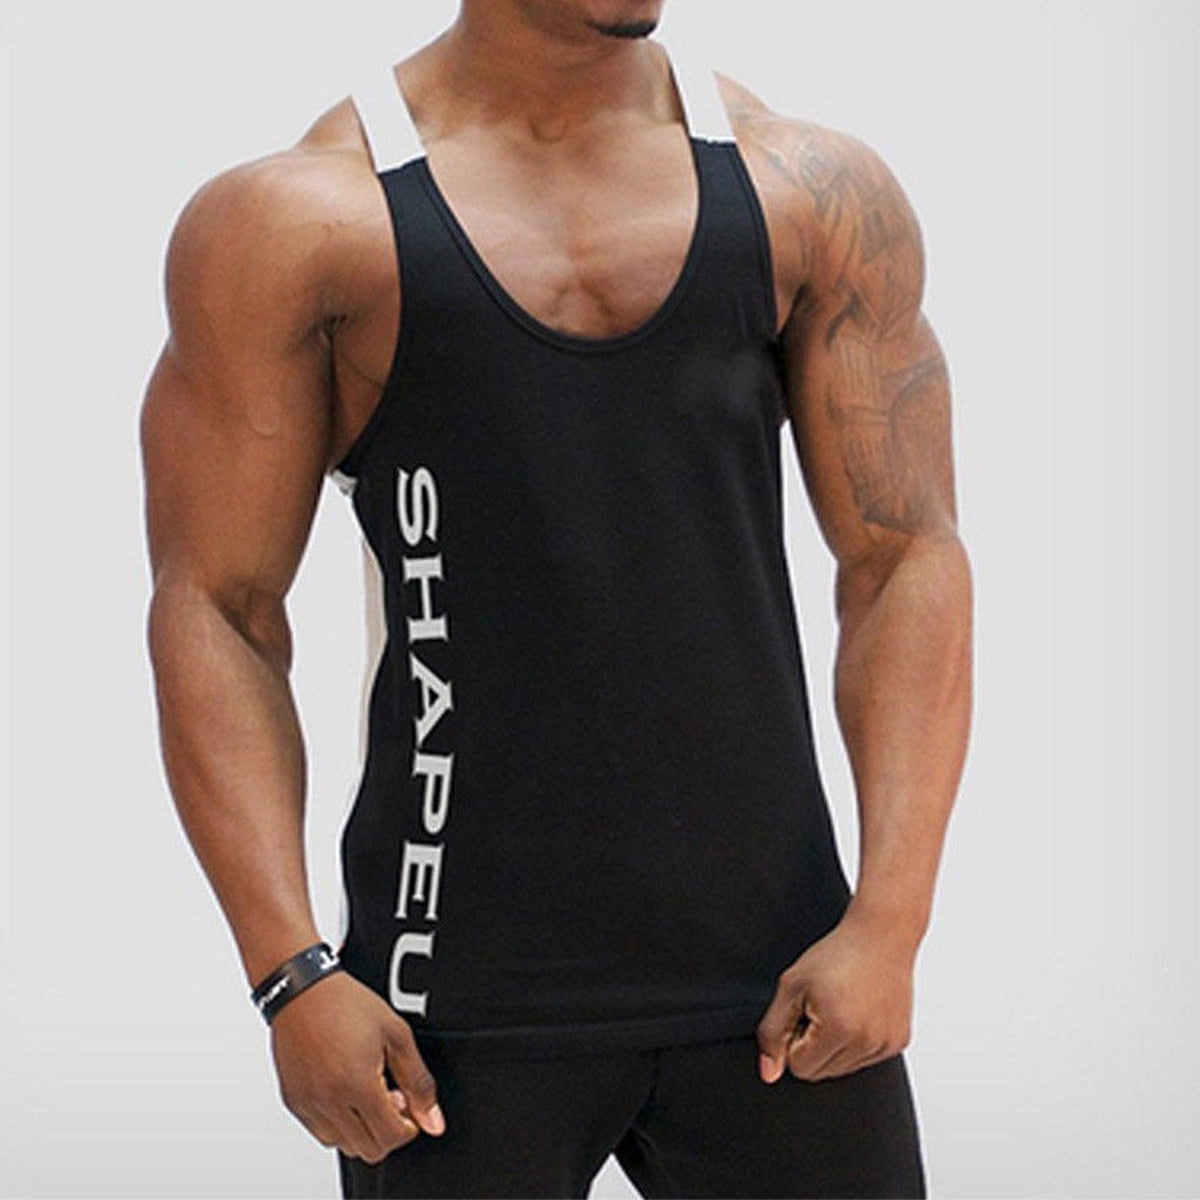 Men Gym Muscle Vest Racerback Bodybuilding Stringer Camo Fitness Sport Tank Top 